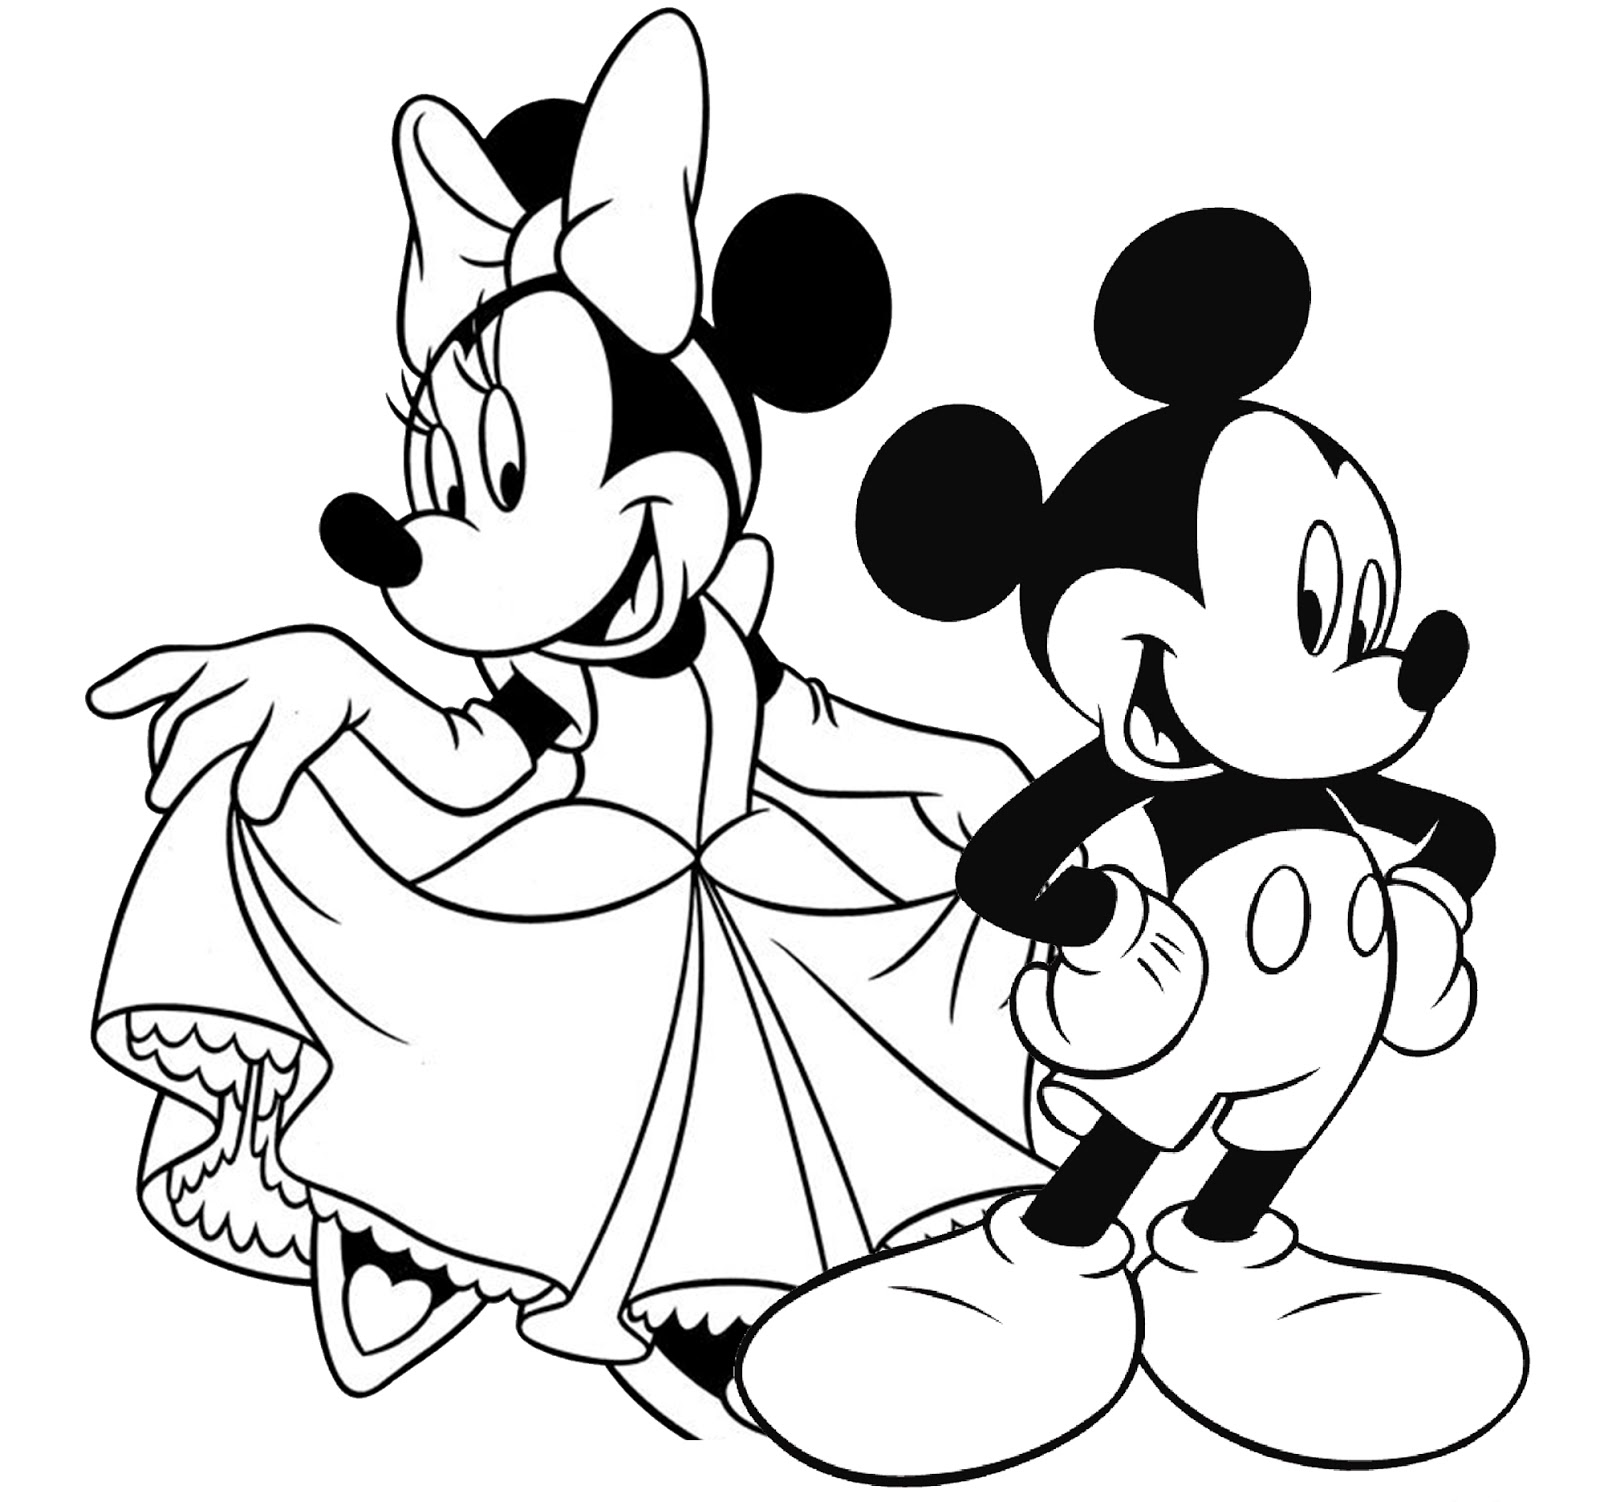 Belajar mewarnai gambar mickey mouse dan minnie mouse untuk anak jpg (1600x1502)